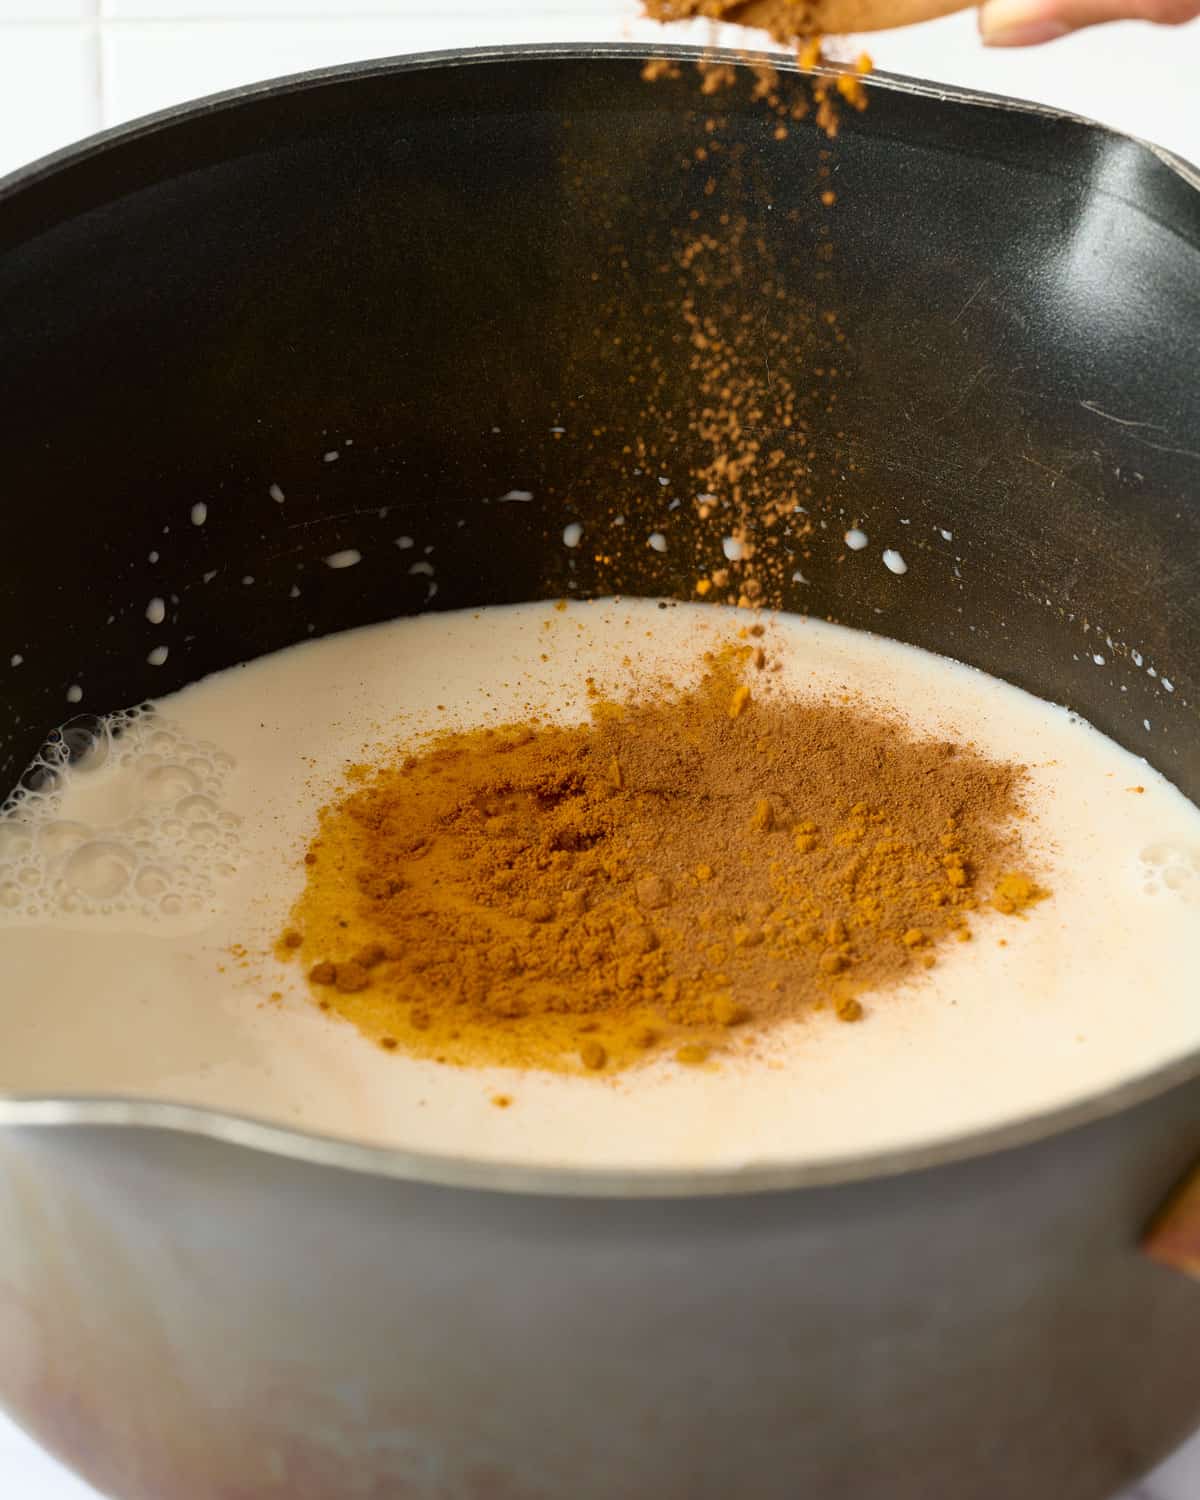 Adding turmeric and cinnamon to a oat milk turmeric latte.